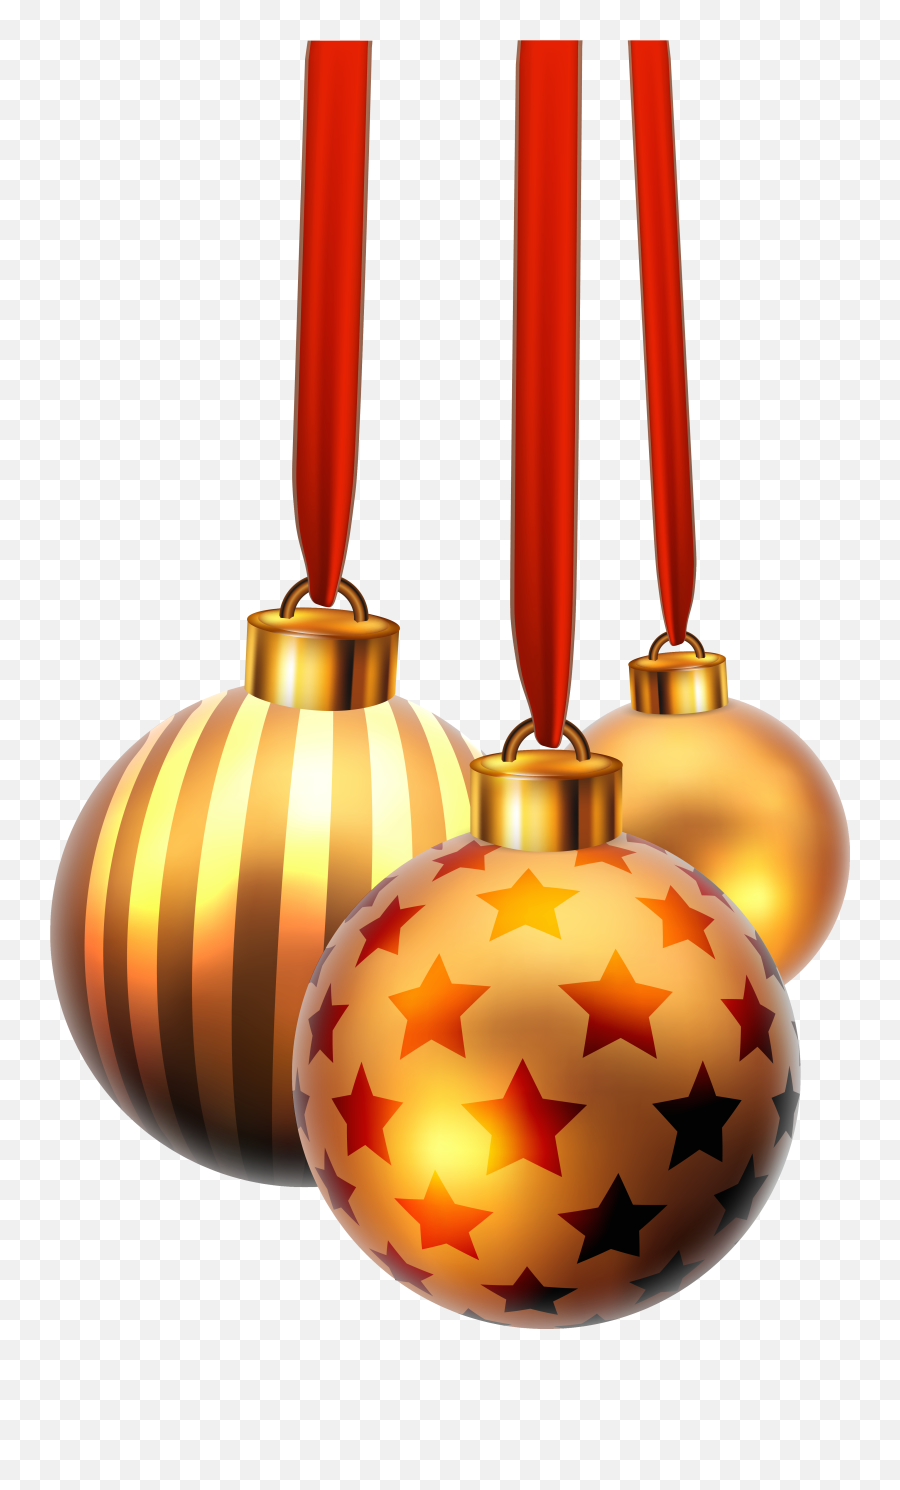 Download Free Png Christmas Balls - Png Image Christmas Ball Png,Christmas Ball Png